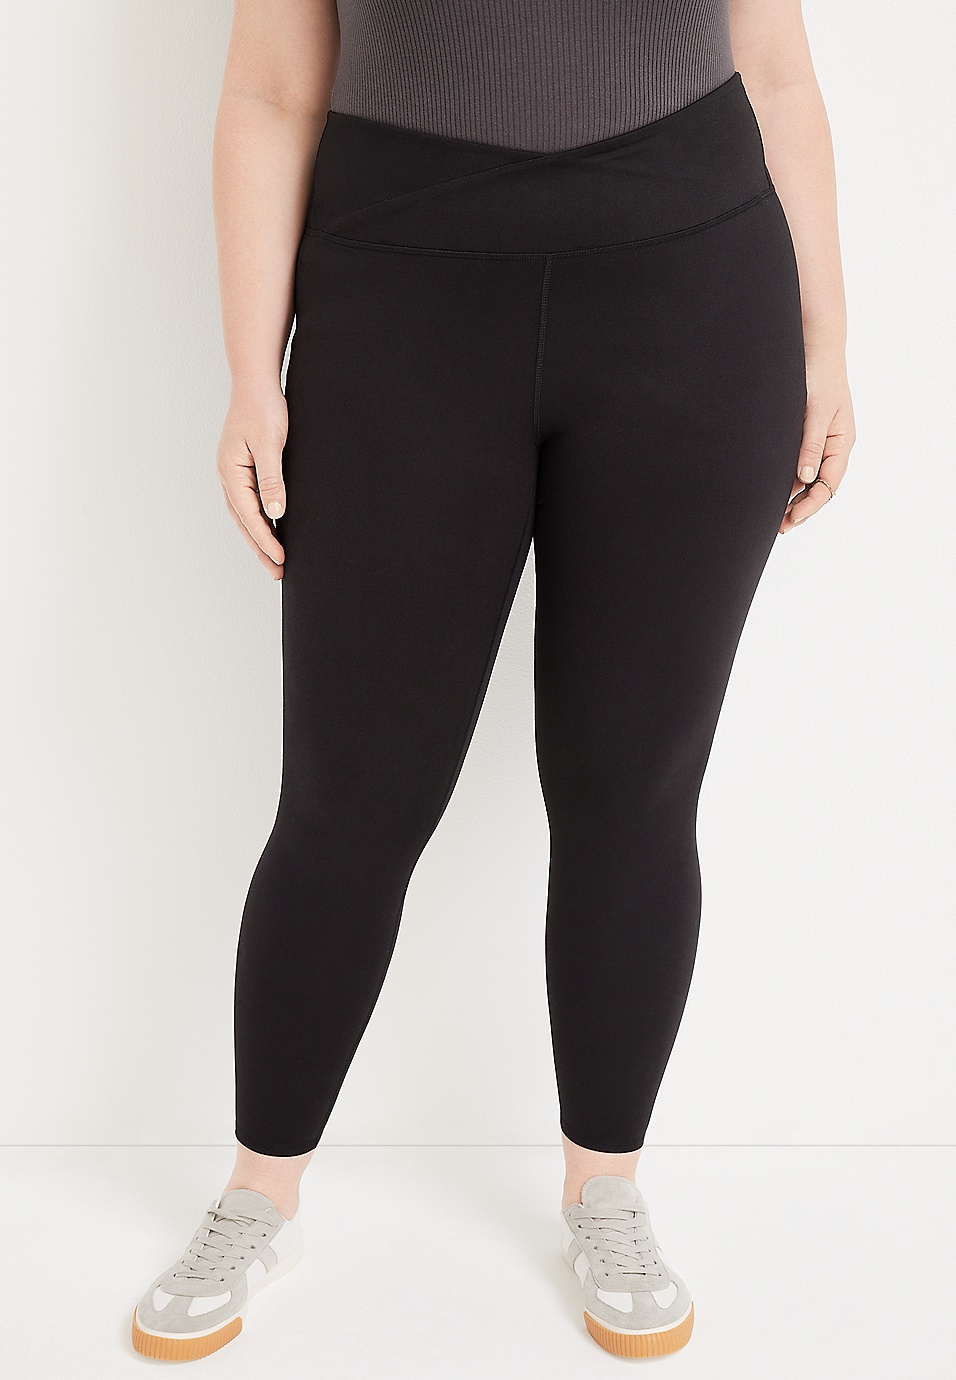 Stretch is Comfort Women's Plus Size Capri Yoga Pants Black Small at  Women's  Clothing store